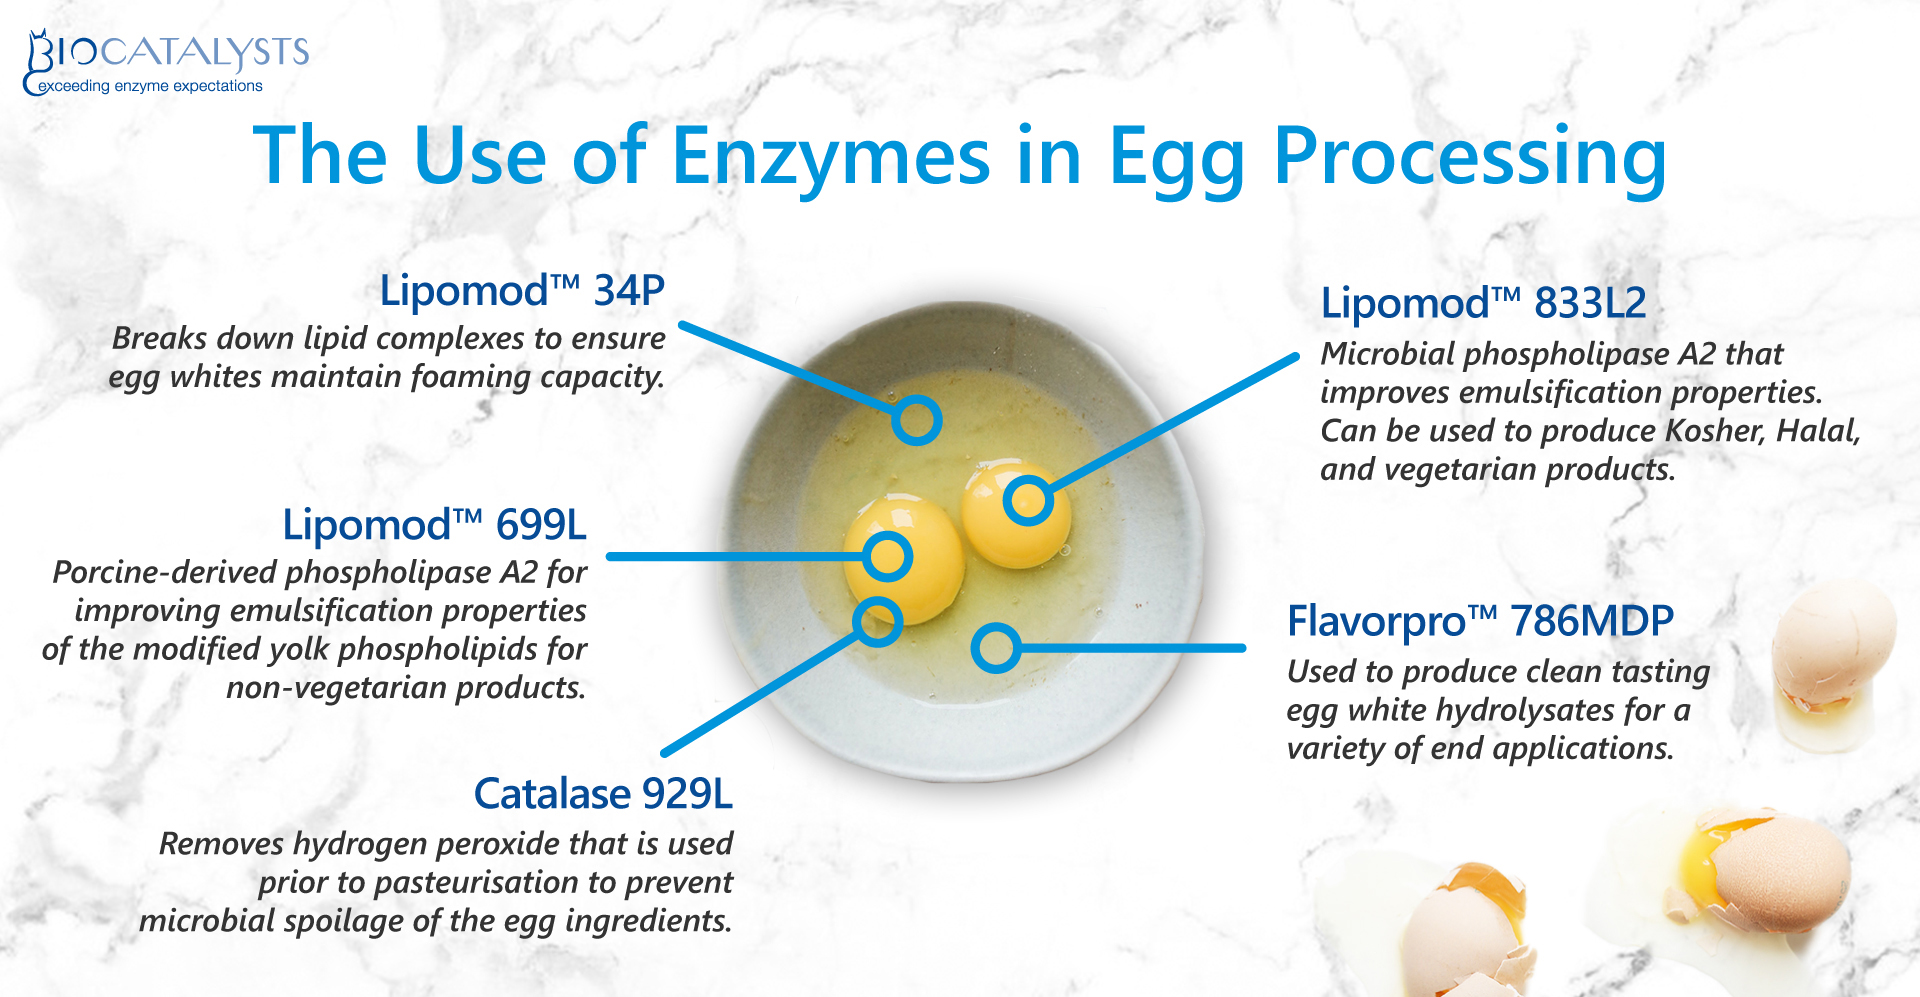 Biocatalysts launches Lipomod 833L2 for egg processing market